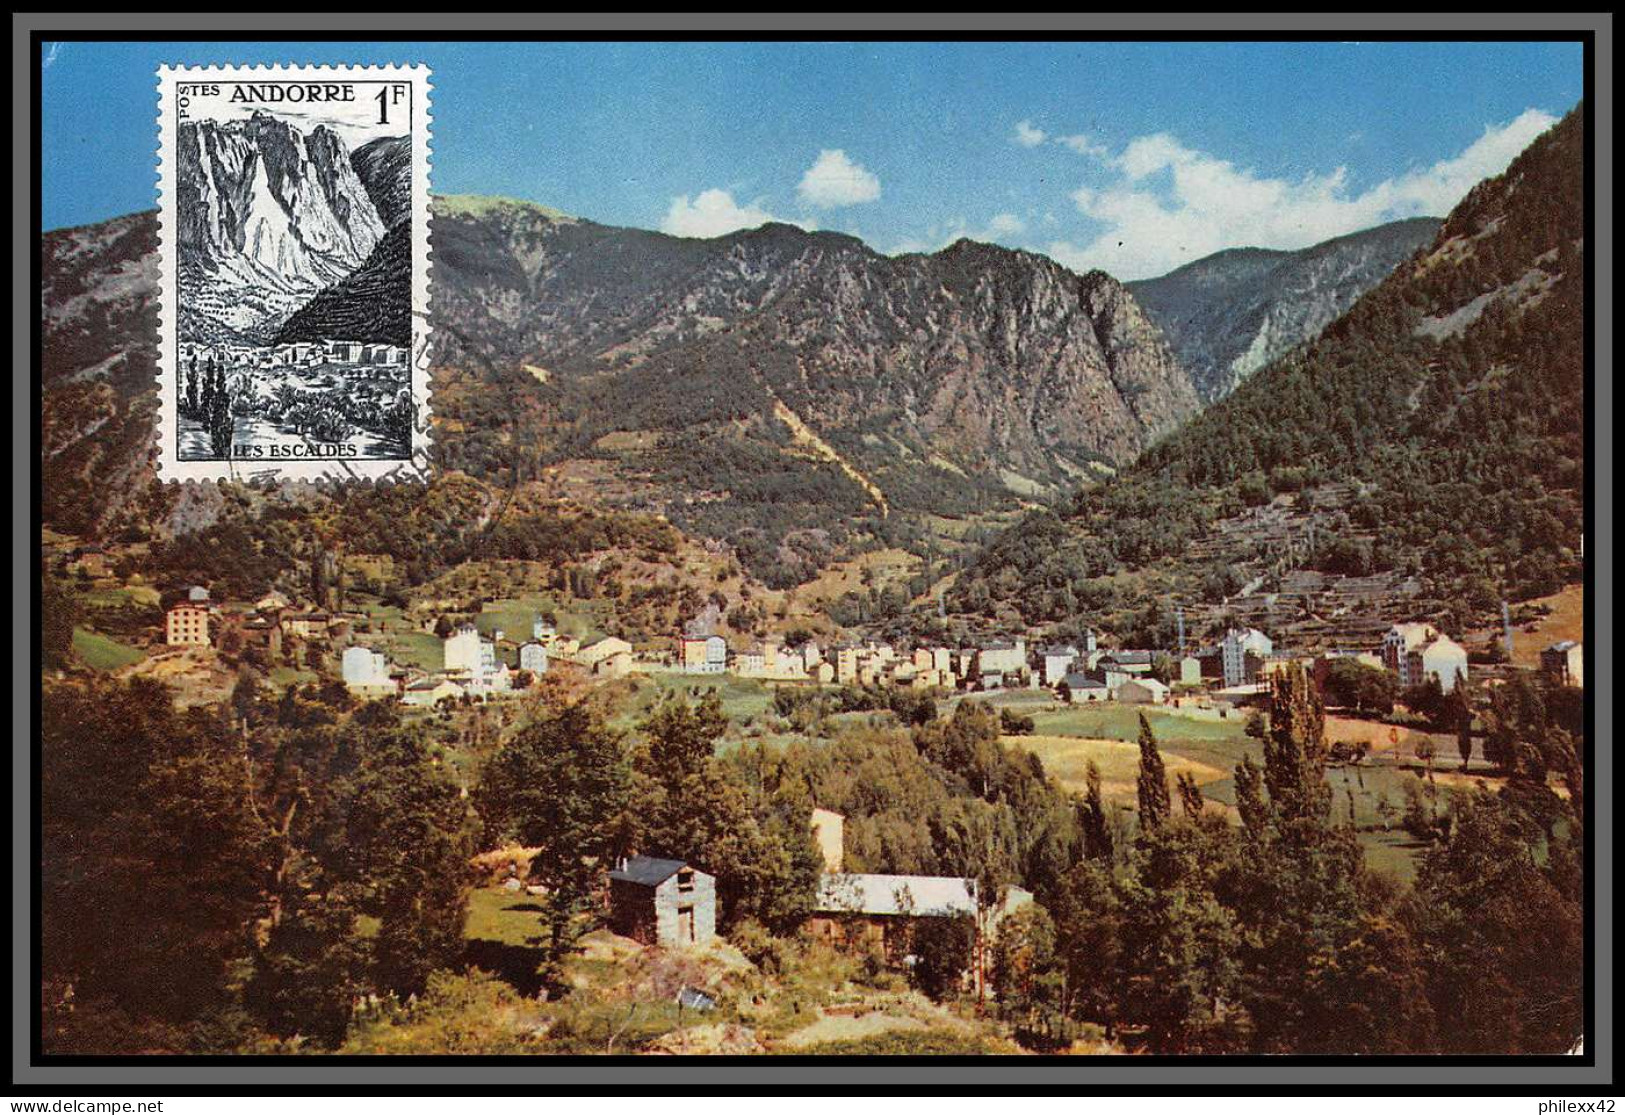 57080 N°138 Les Escaldes 1959 Andorre Andorra Carte Maximum (card) COULEUR édition Puig - Cartes-Maximum (CM)